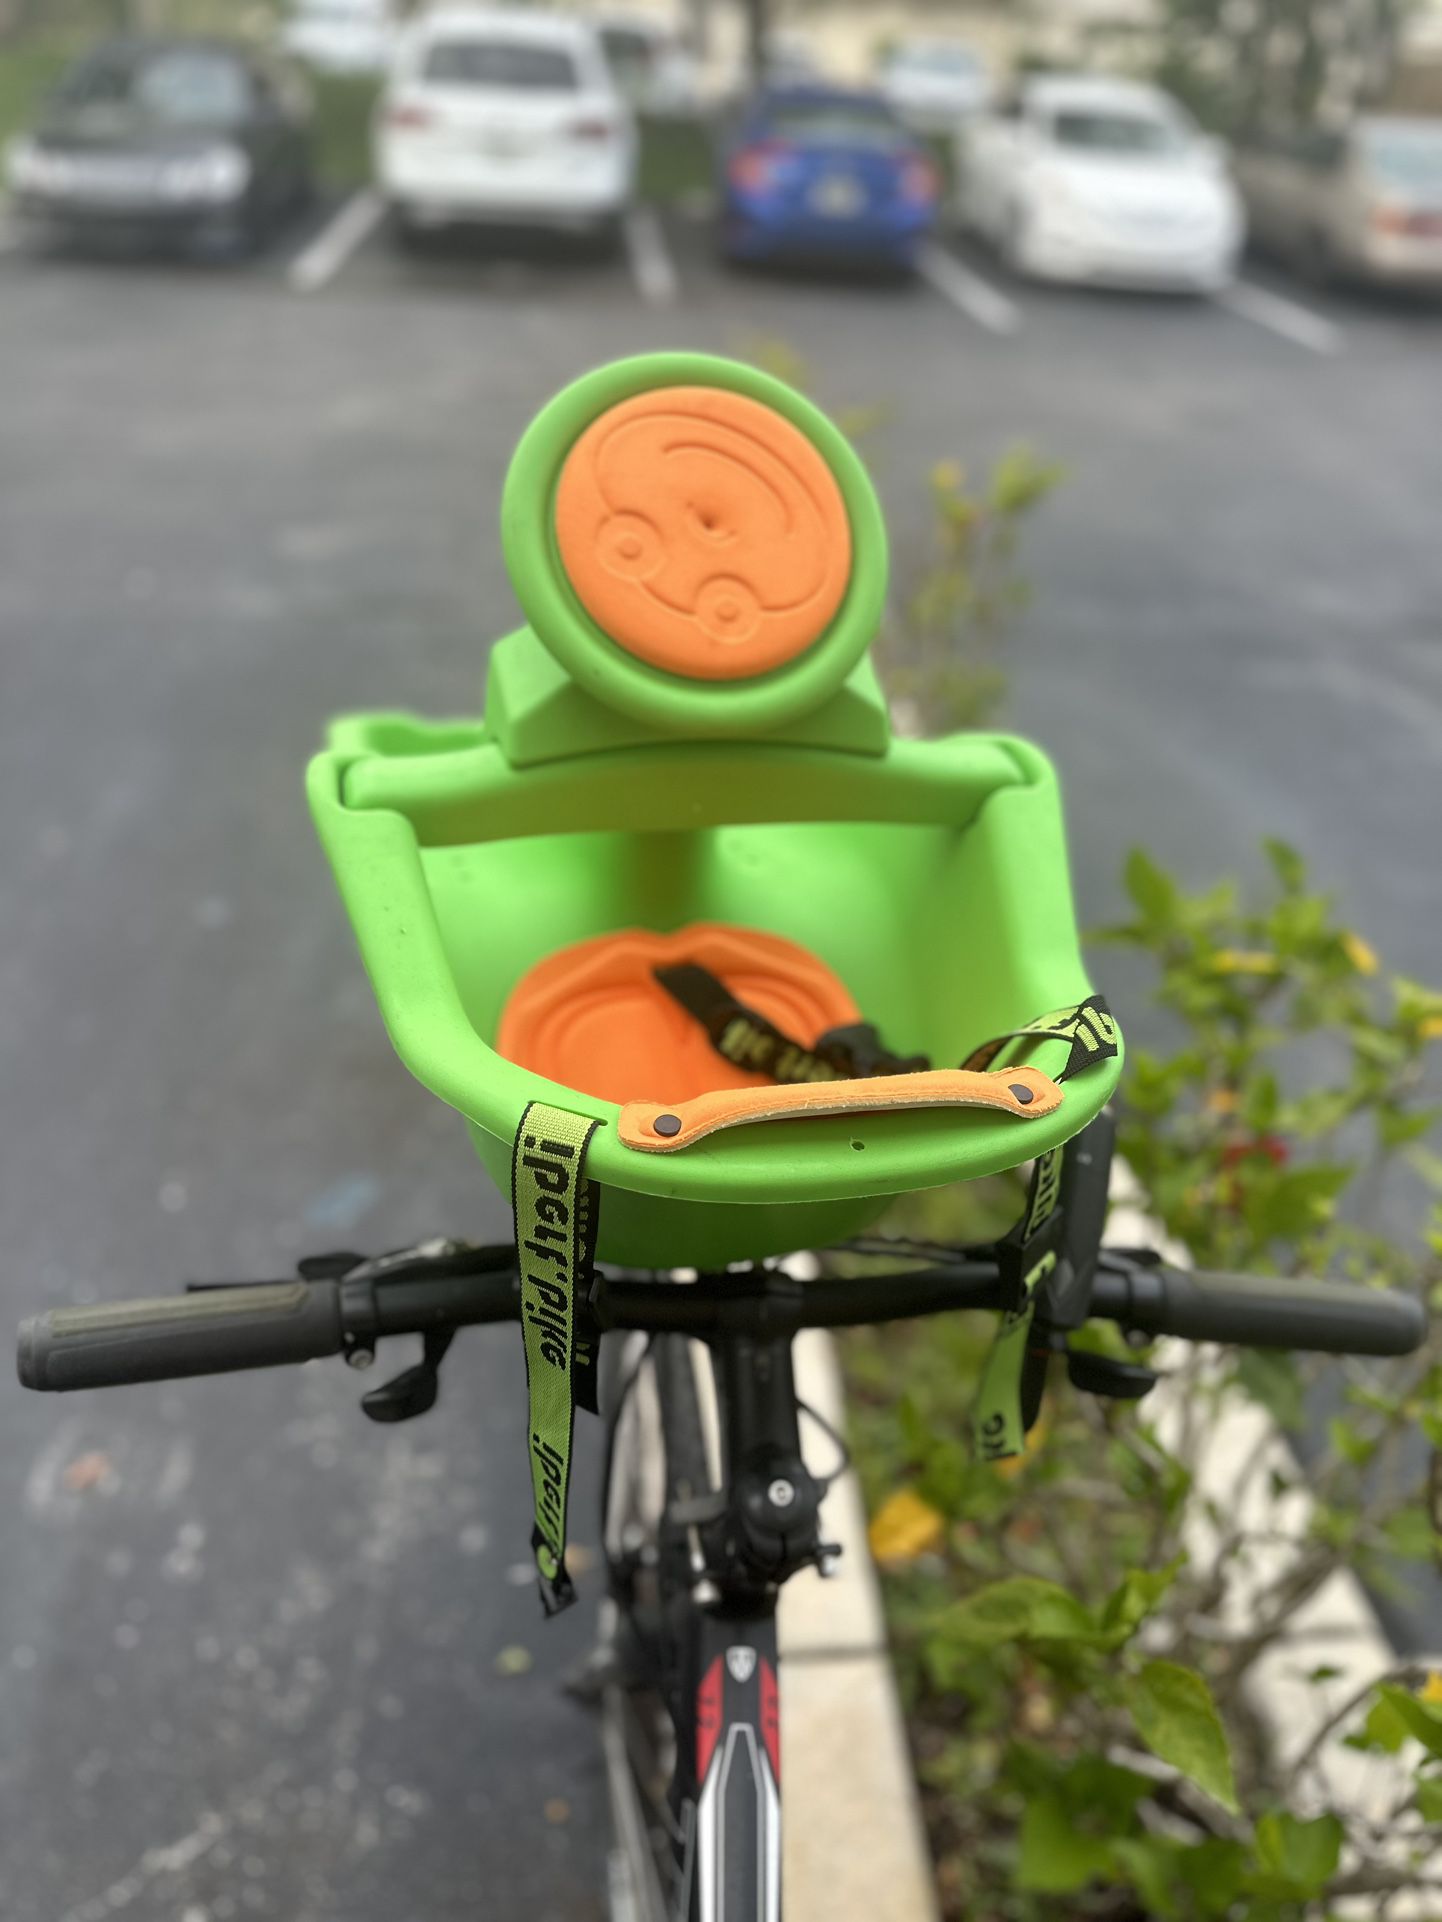 Bike Chair For Kids 